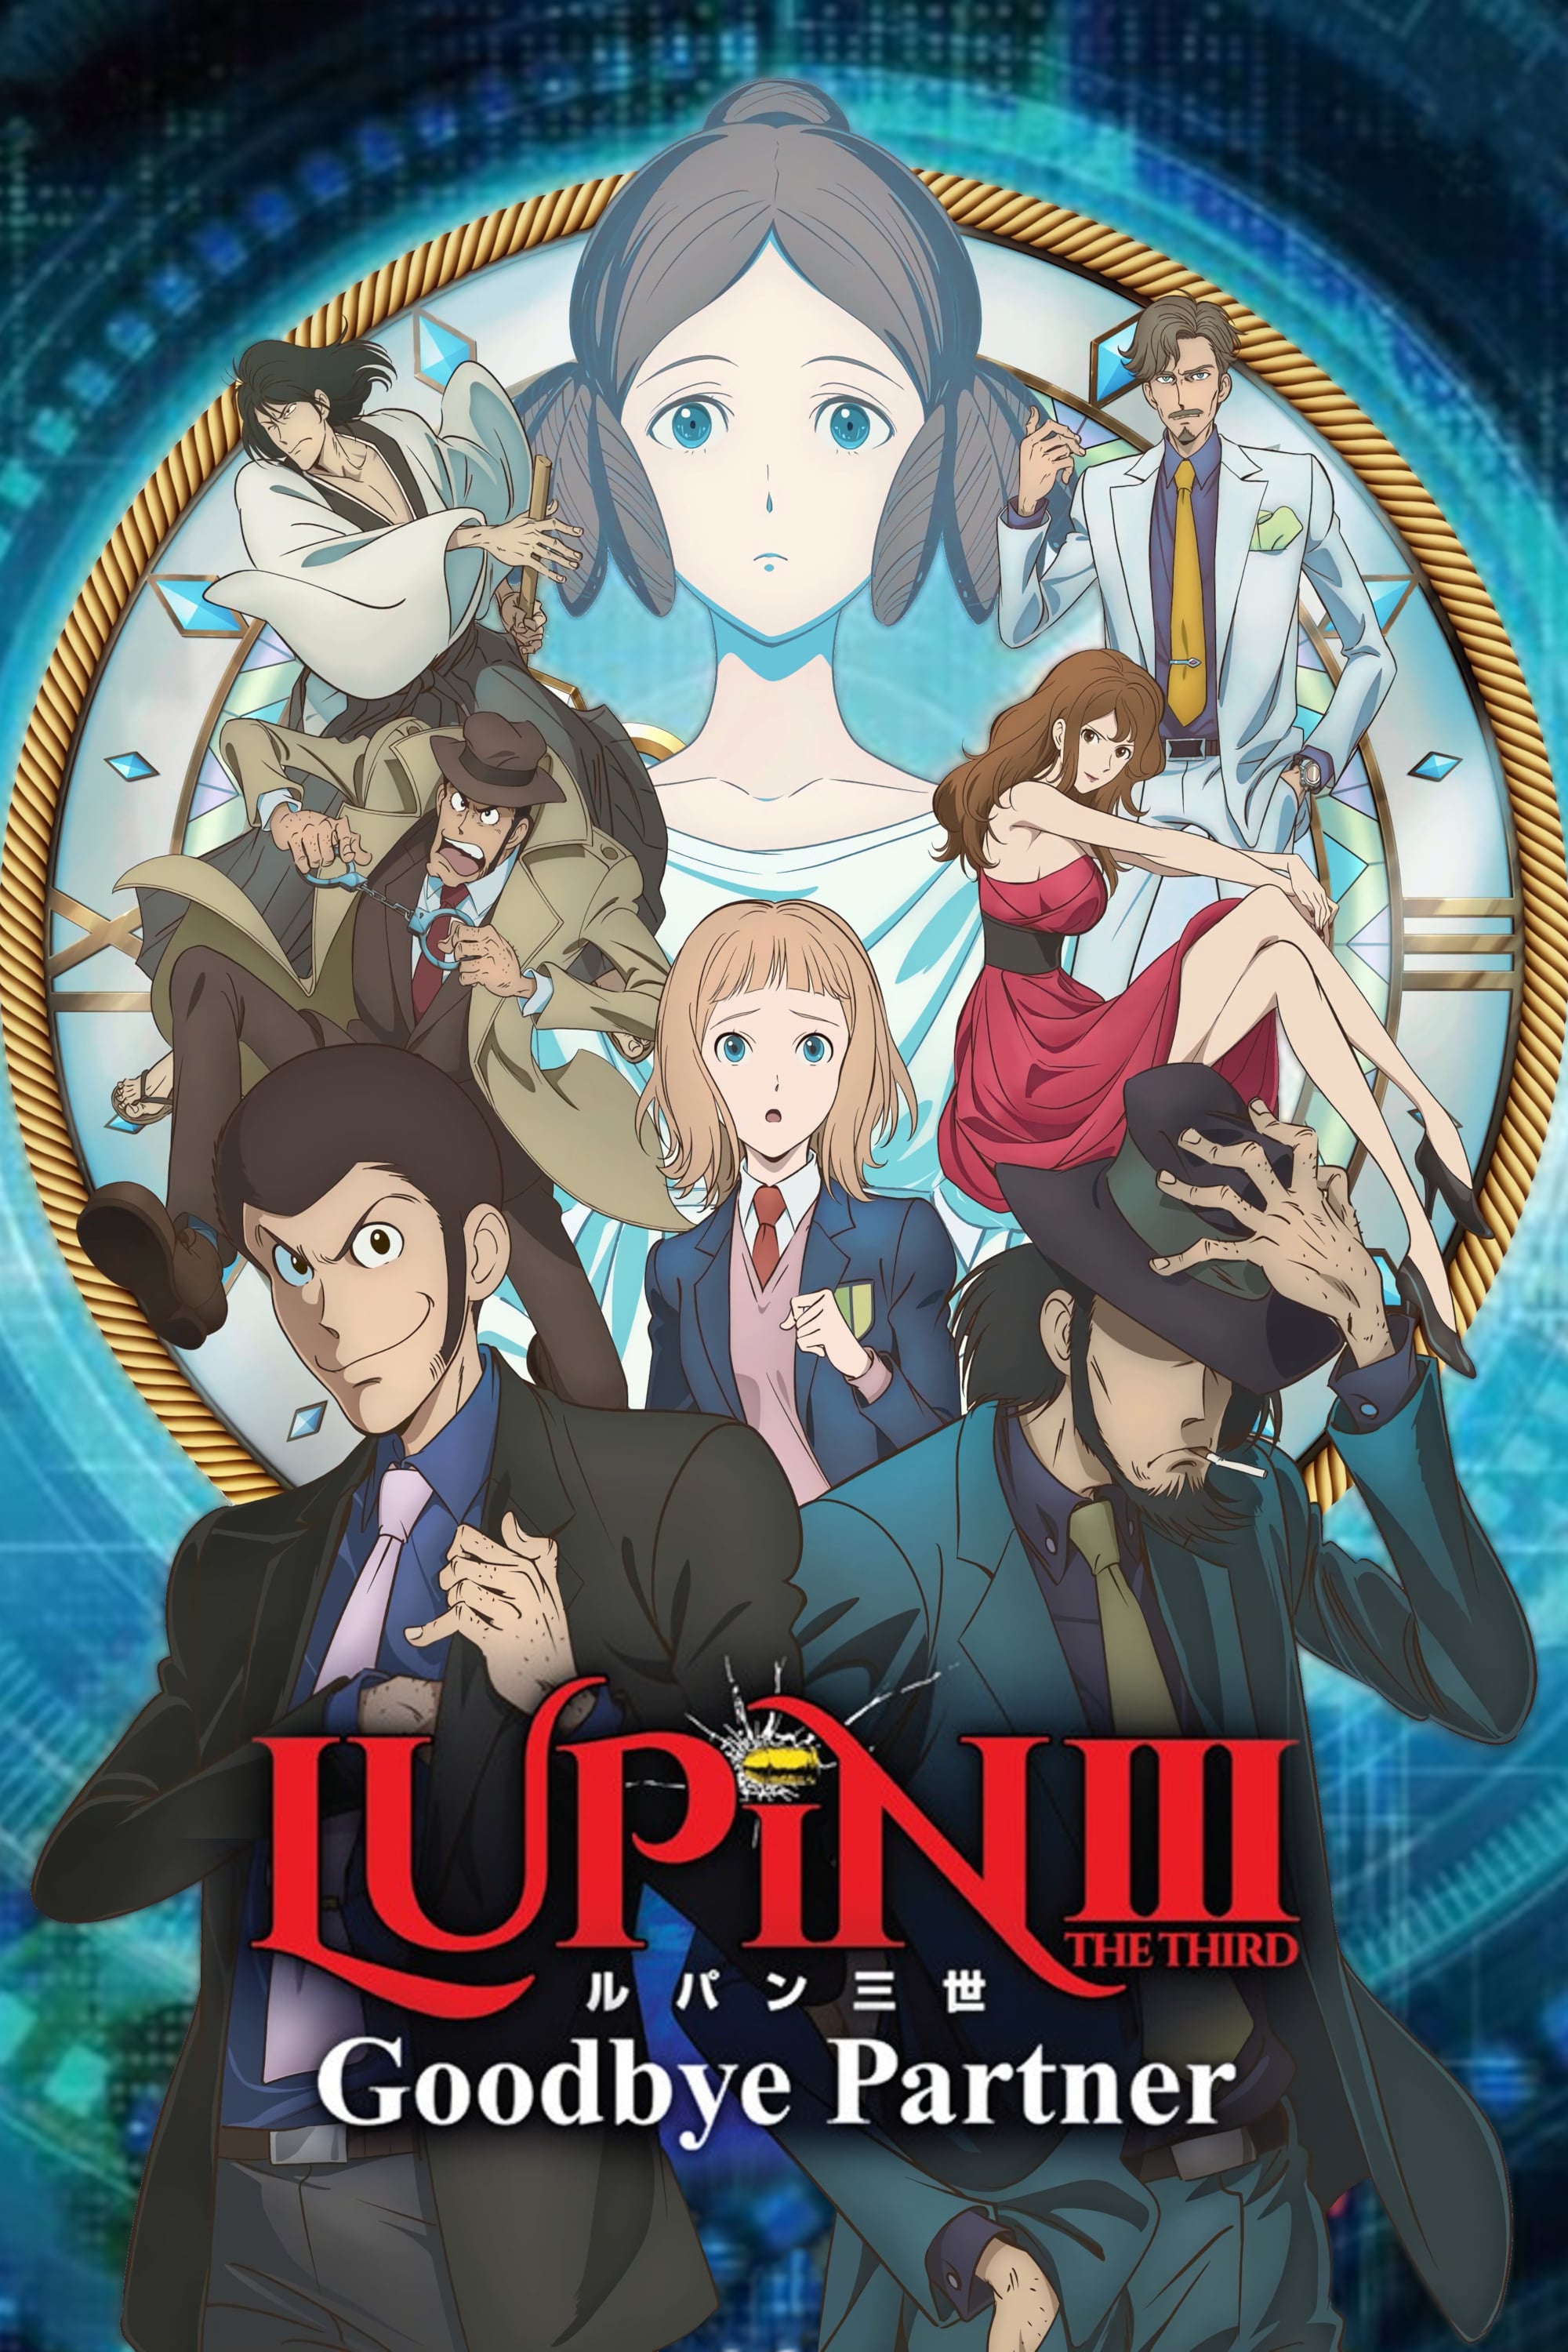 Lupin the Third: Goodbye Partner